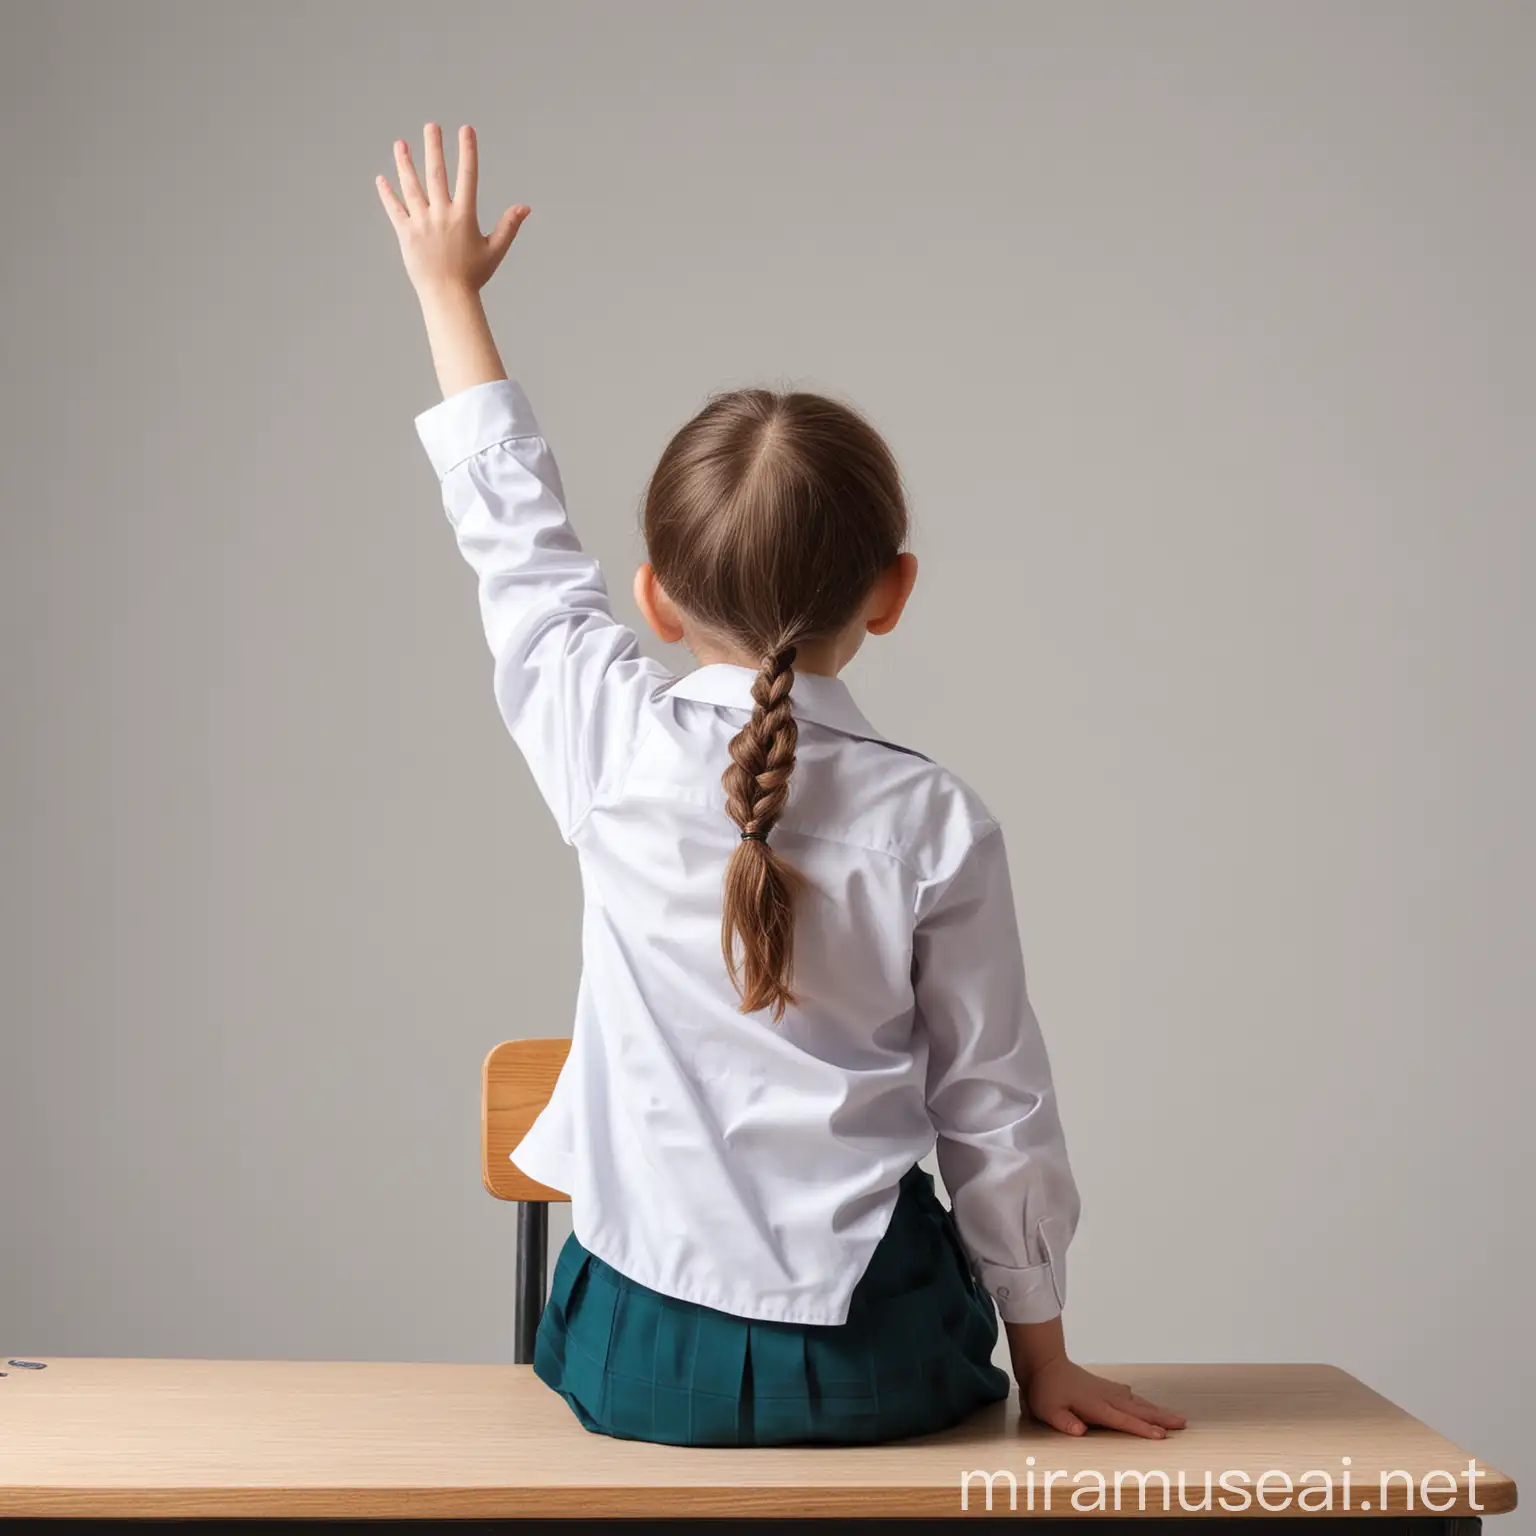 Schoolgirl Raising Hand on Desk Classroom Scene